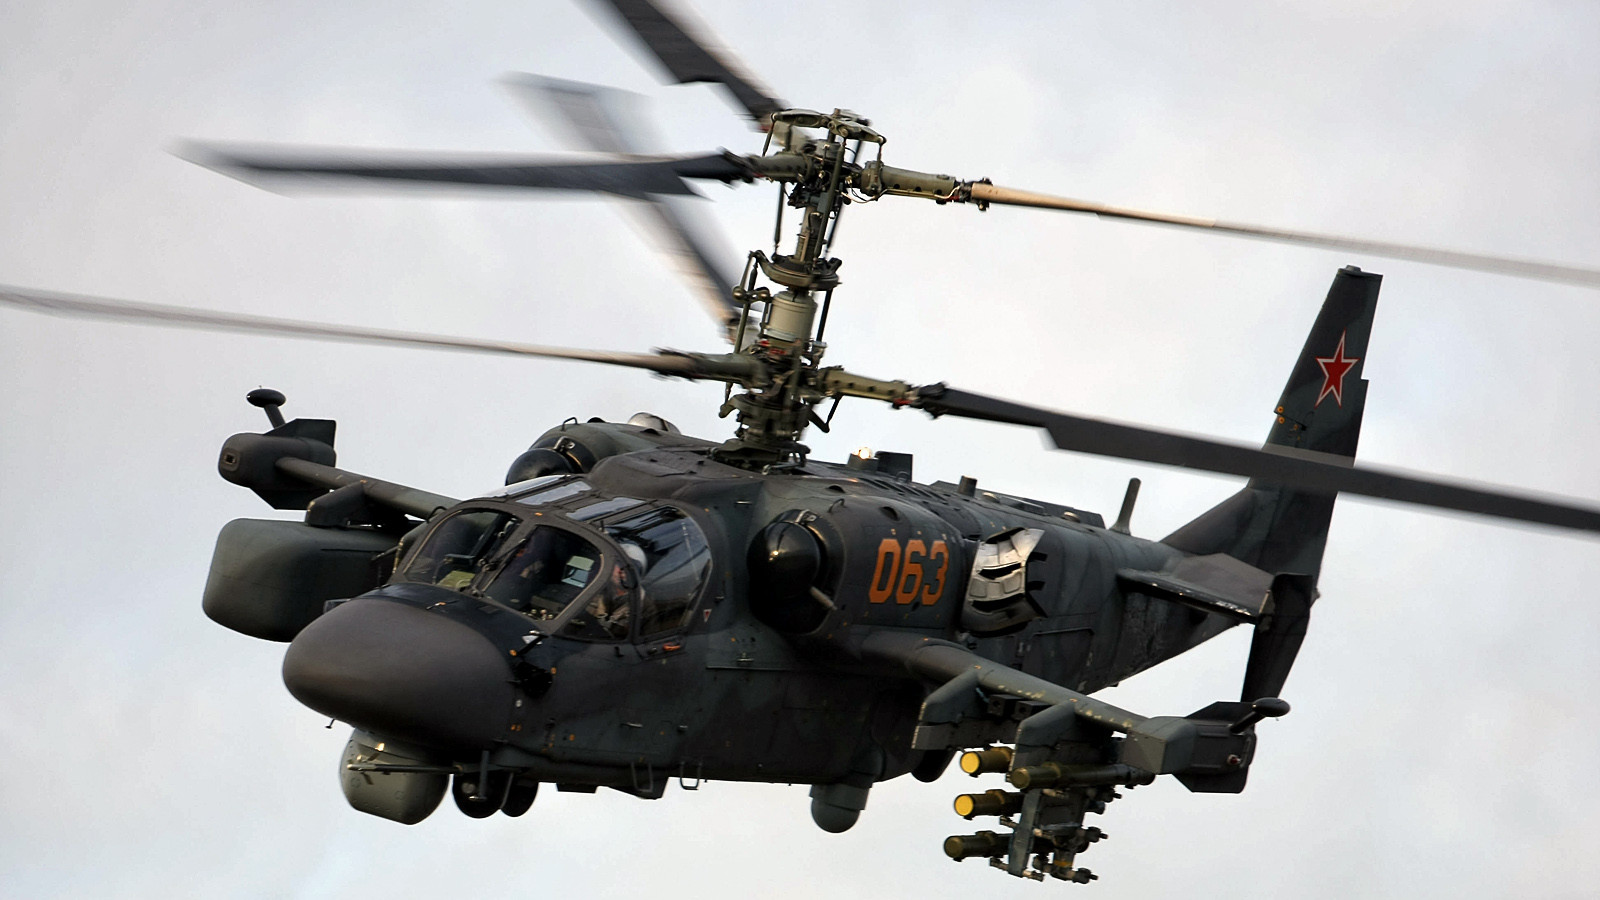 Ka-52 Alligator: Το ρωσικό επιθετικό ελικόπτερο που αψηφά τους νόμους της φυσικής [βίντεο]